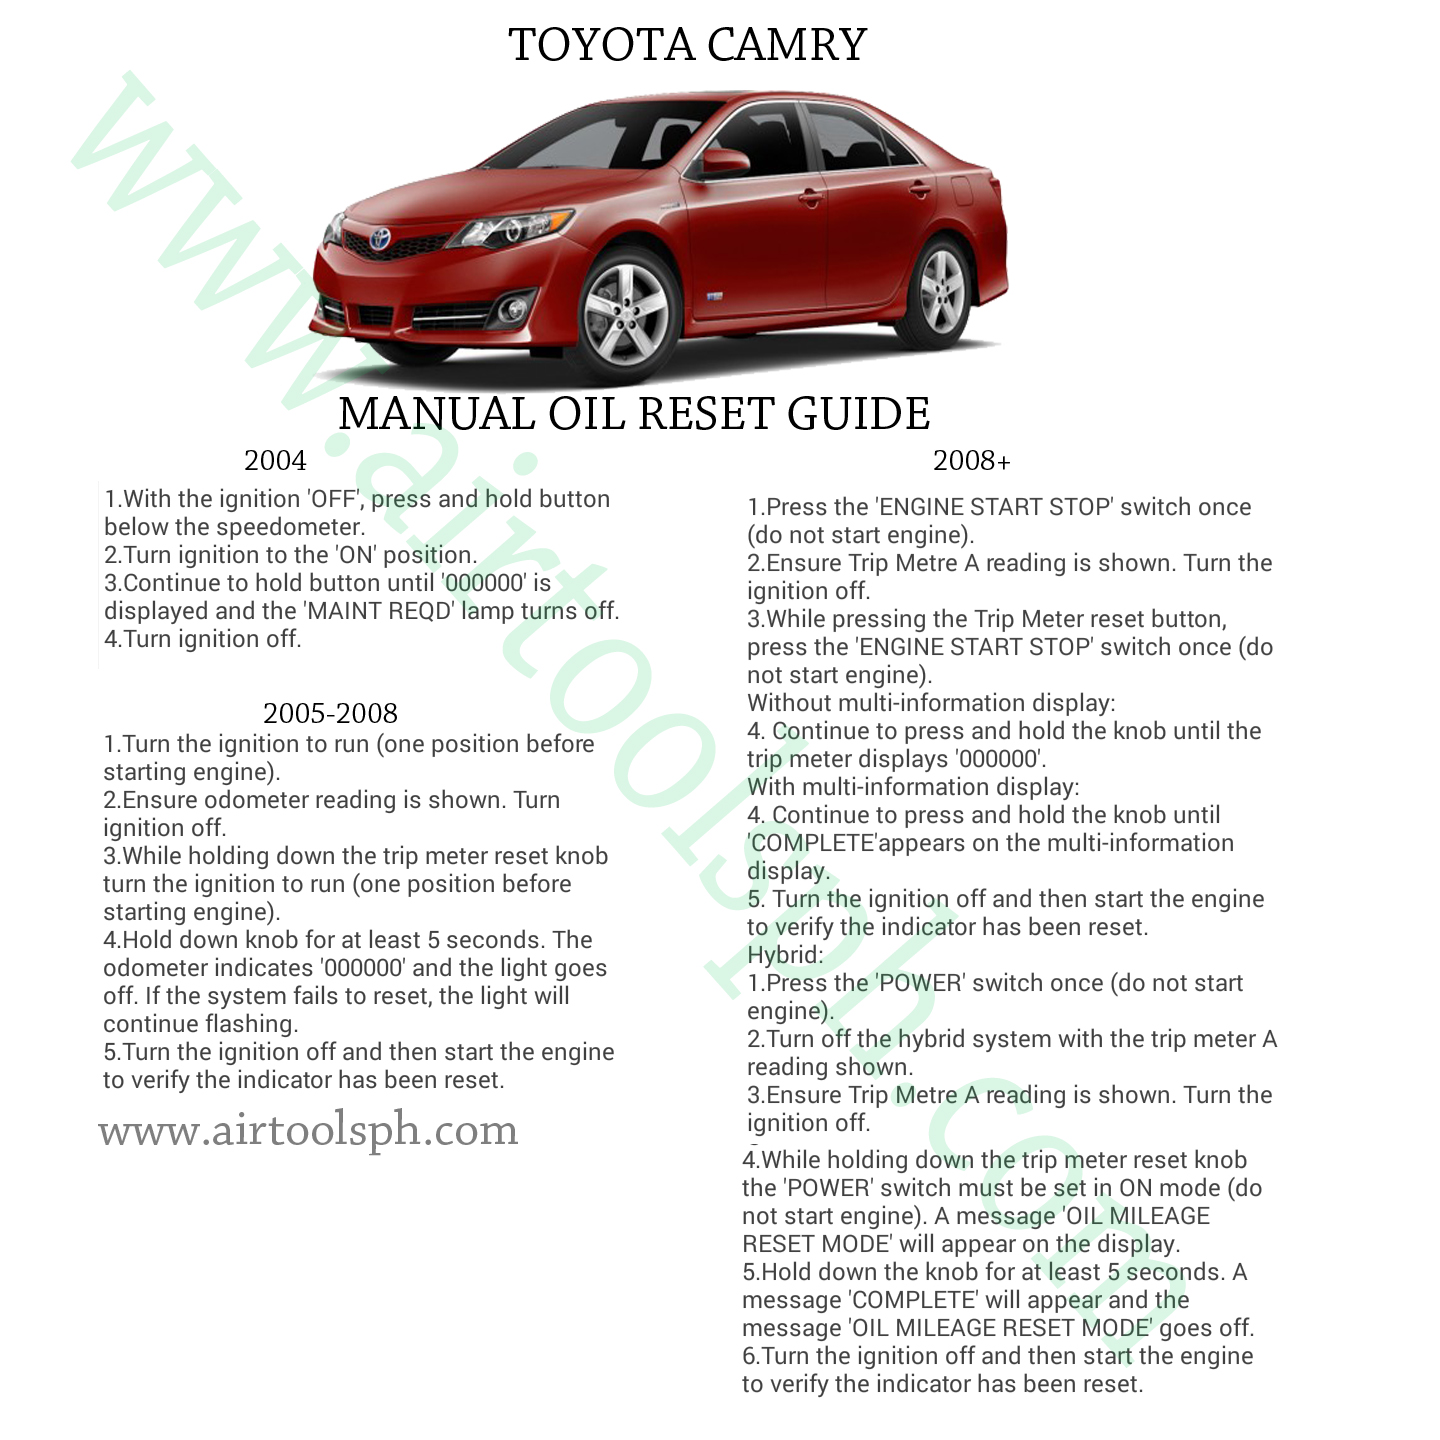 Расход масла камри. Toyota Camry 40 Oil manual. Мануал по моторному маслу Тойота Камри 40. Масло Камри 40 2.4 по мануалу.